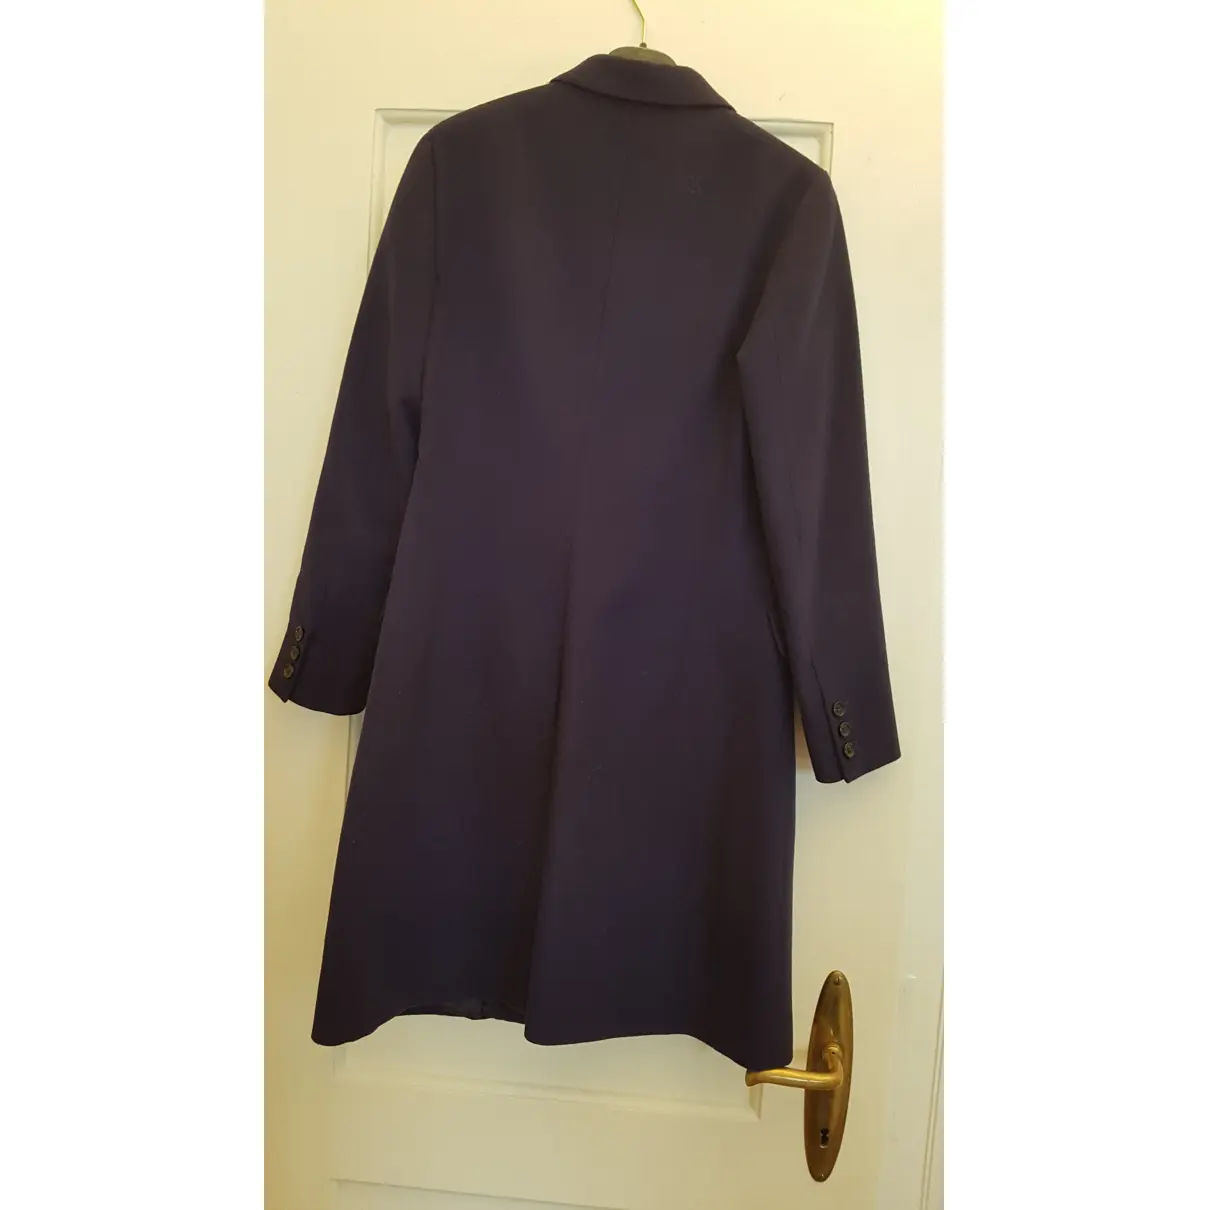 Buy Prada Cashmere coat online